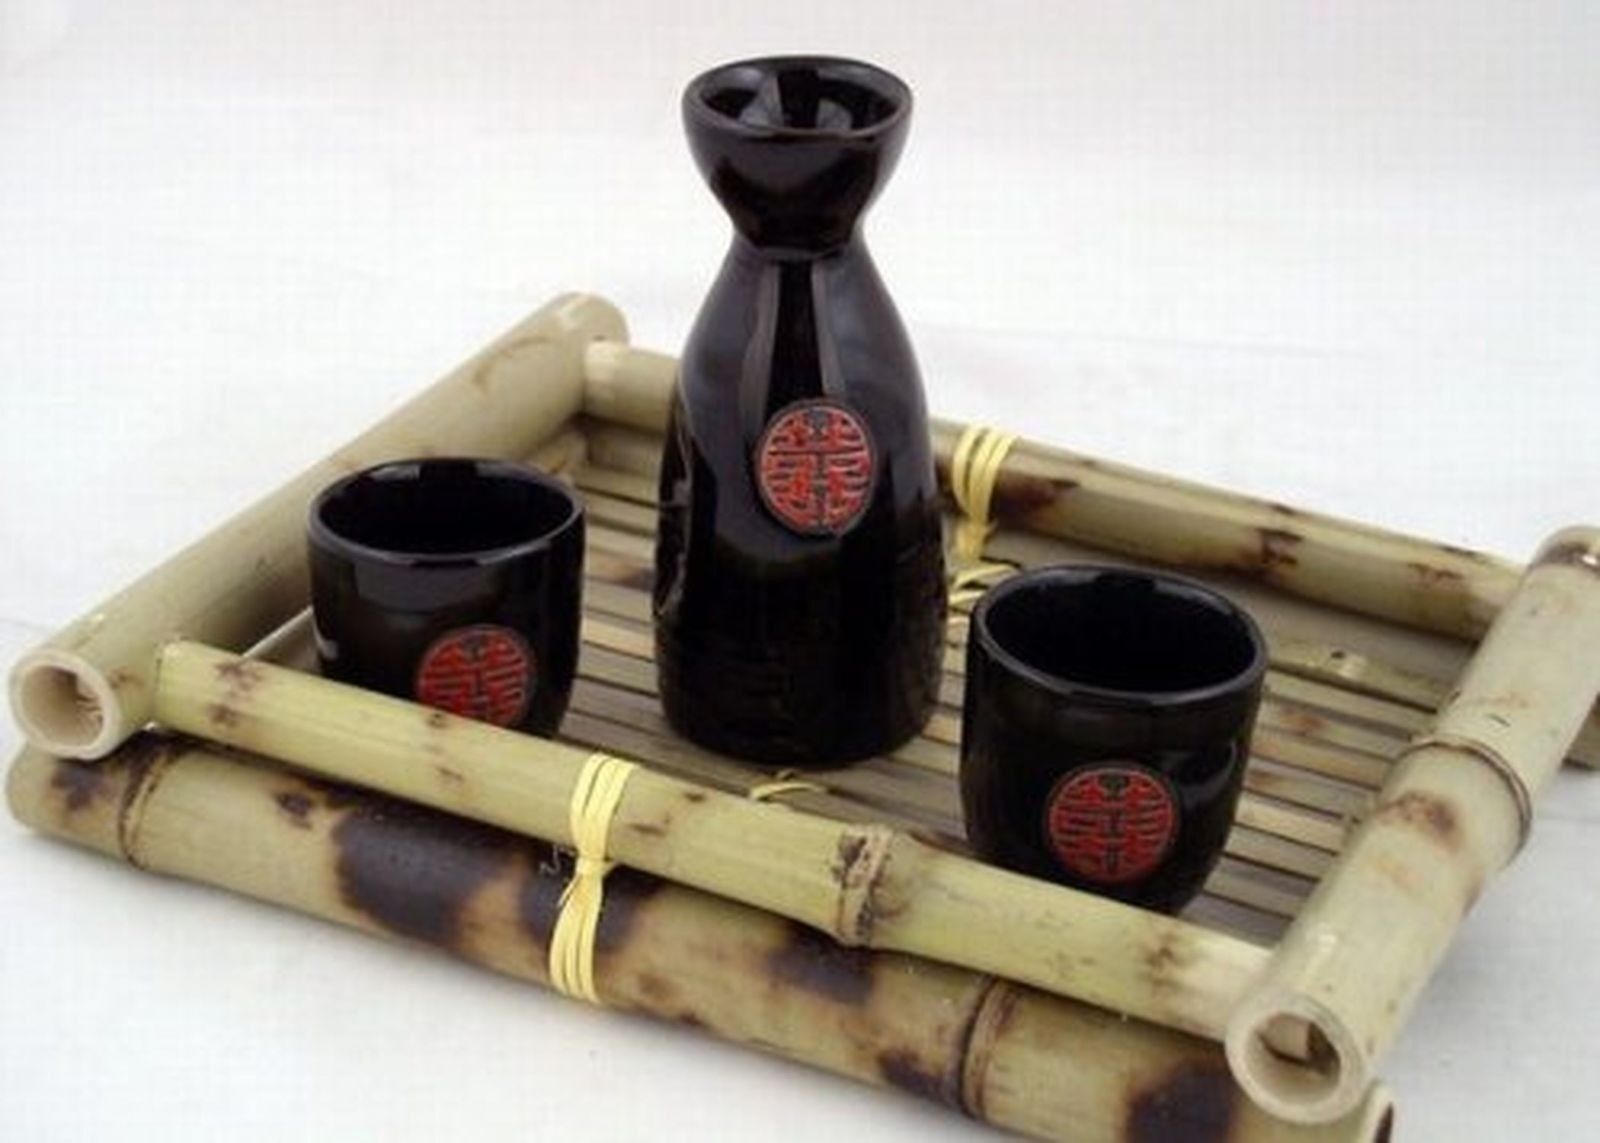 Glazed Ceramic 3 Pcs Japanese Sake Set In Gift Box